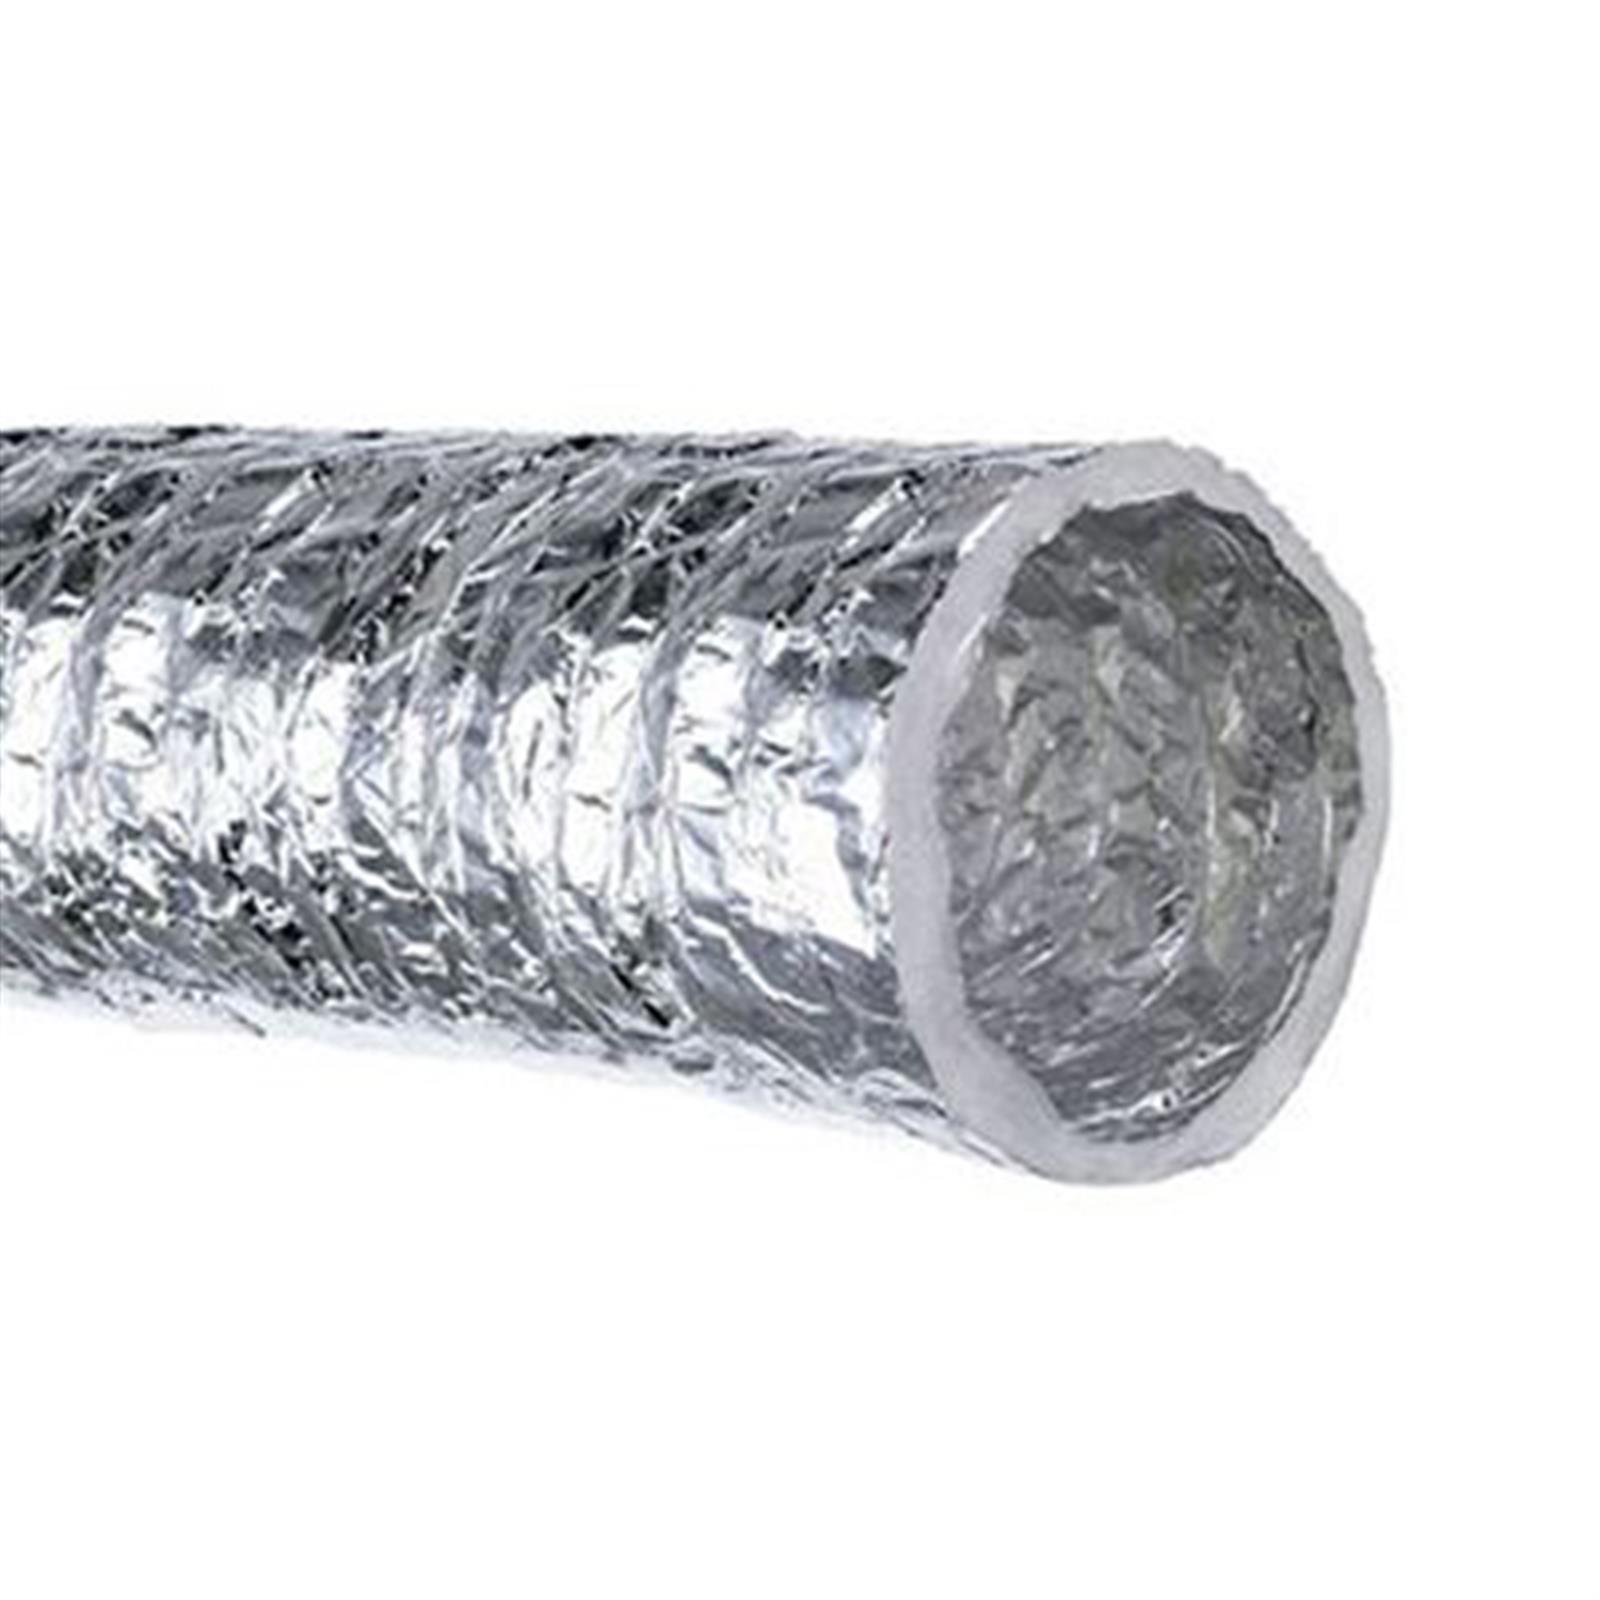 Gaine aluminium isolée polyester R0.07 W/mk - Ø 160 mm - classée M1